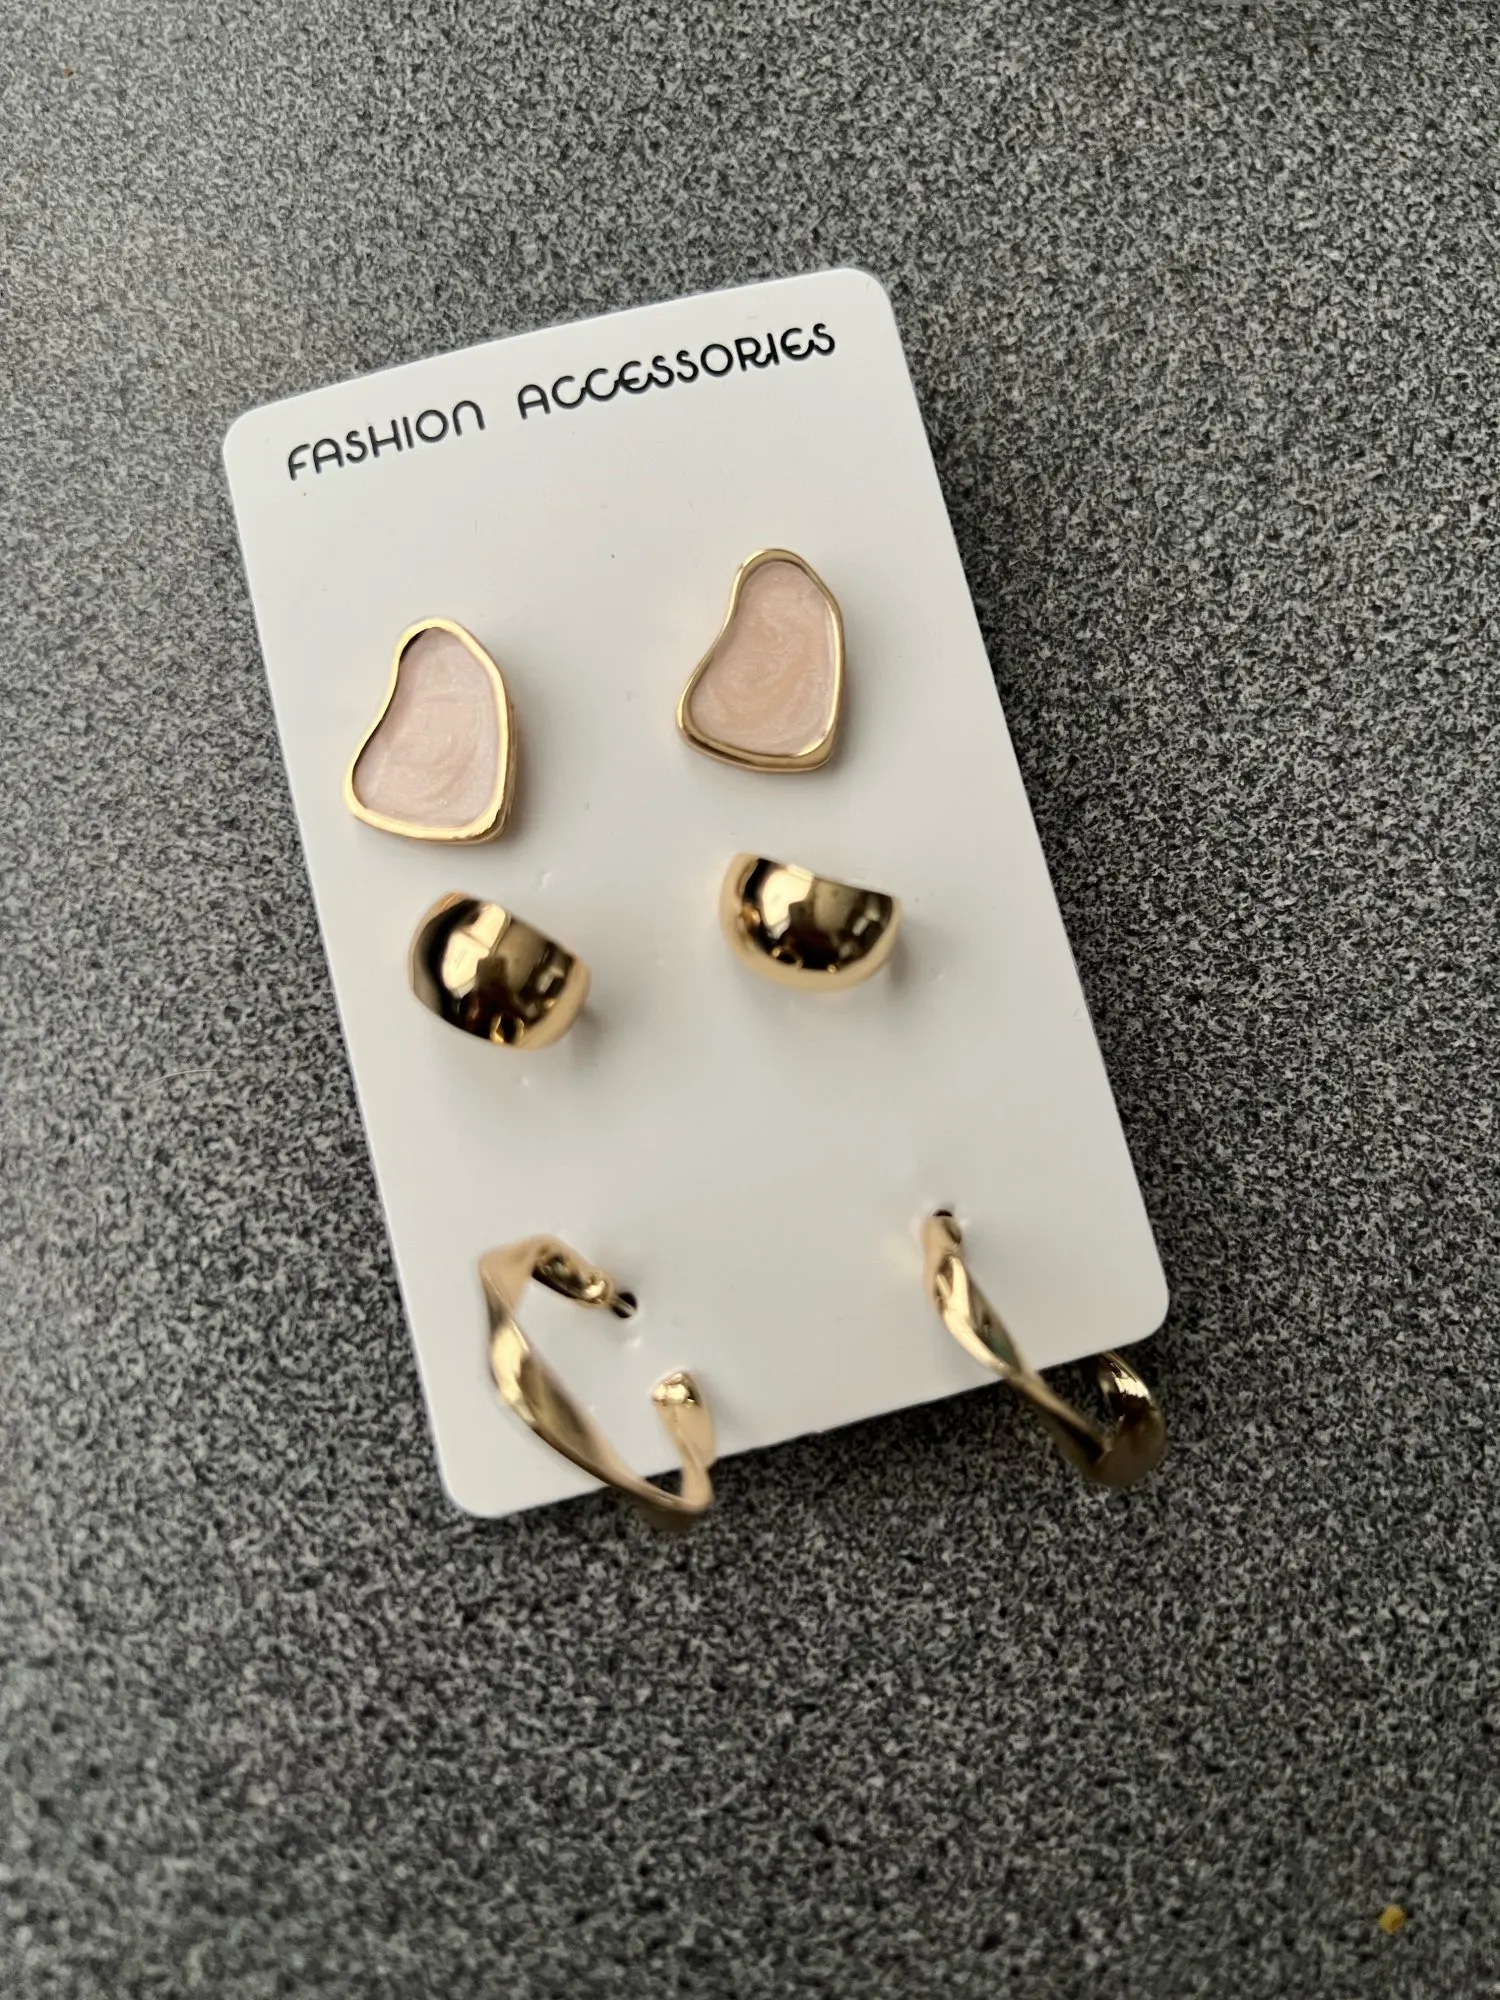 Hit Color Enamel Irregular Oval Stud Earrings For Women Asymmetric Circle Jewelry Girl Gifts